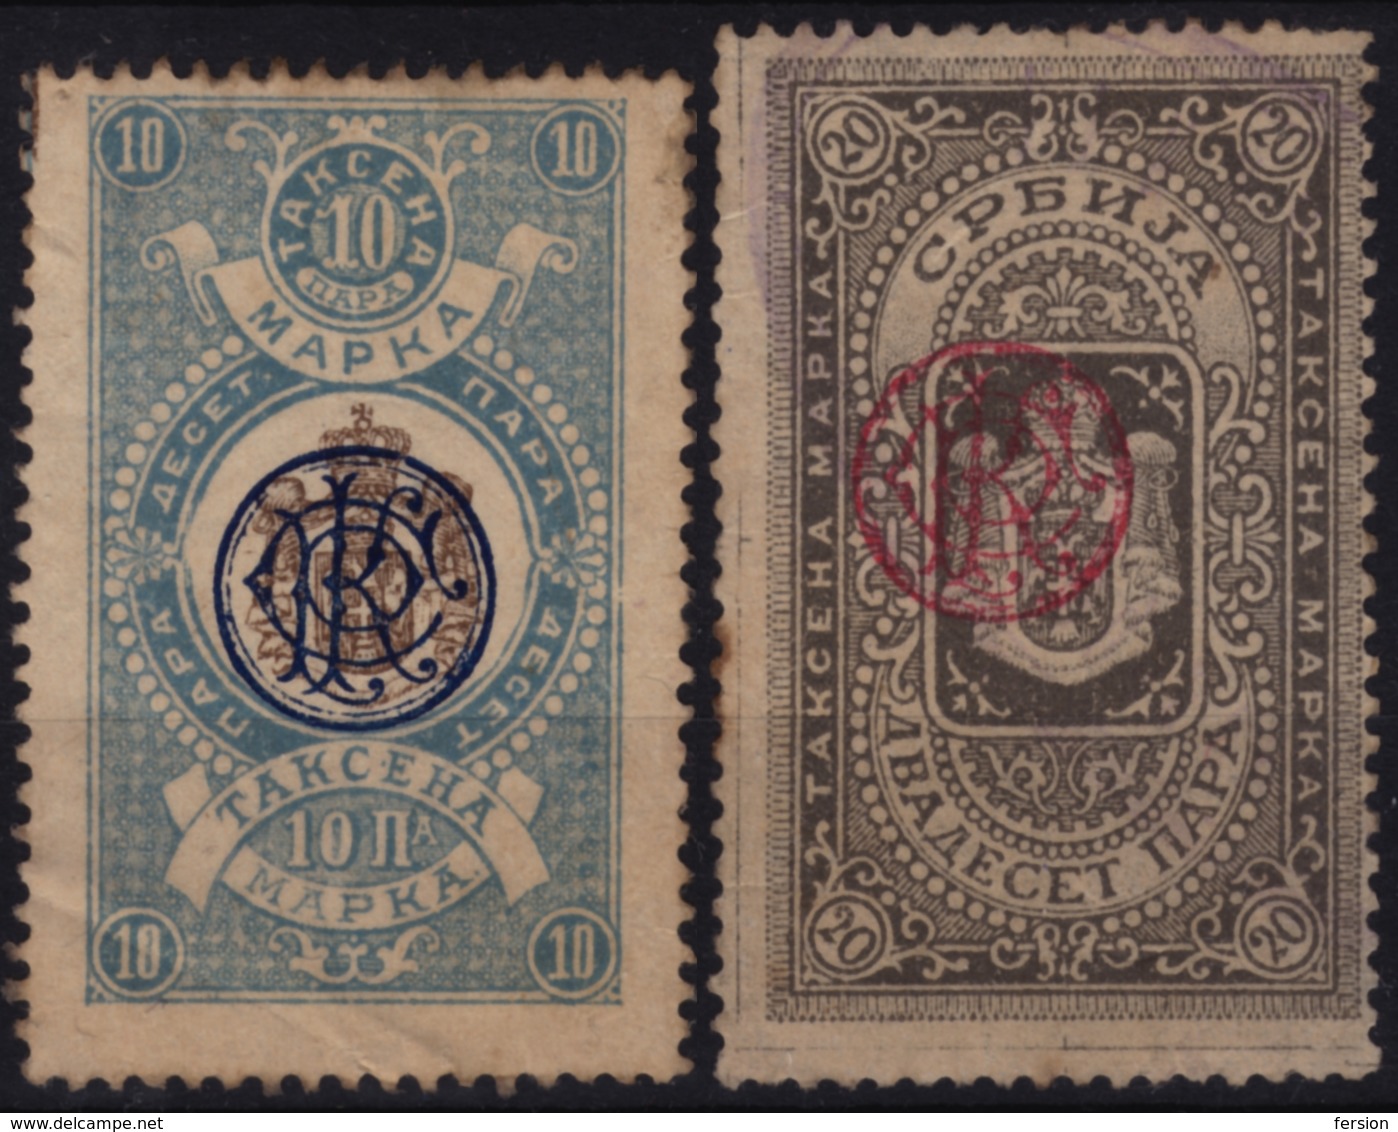 Revenue TAX Stamp - 1880's SERBIA - Overprint - PAIR - Used - 10 + 20 Din - Serbia